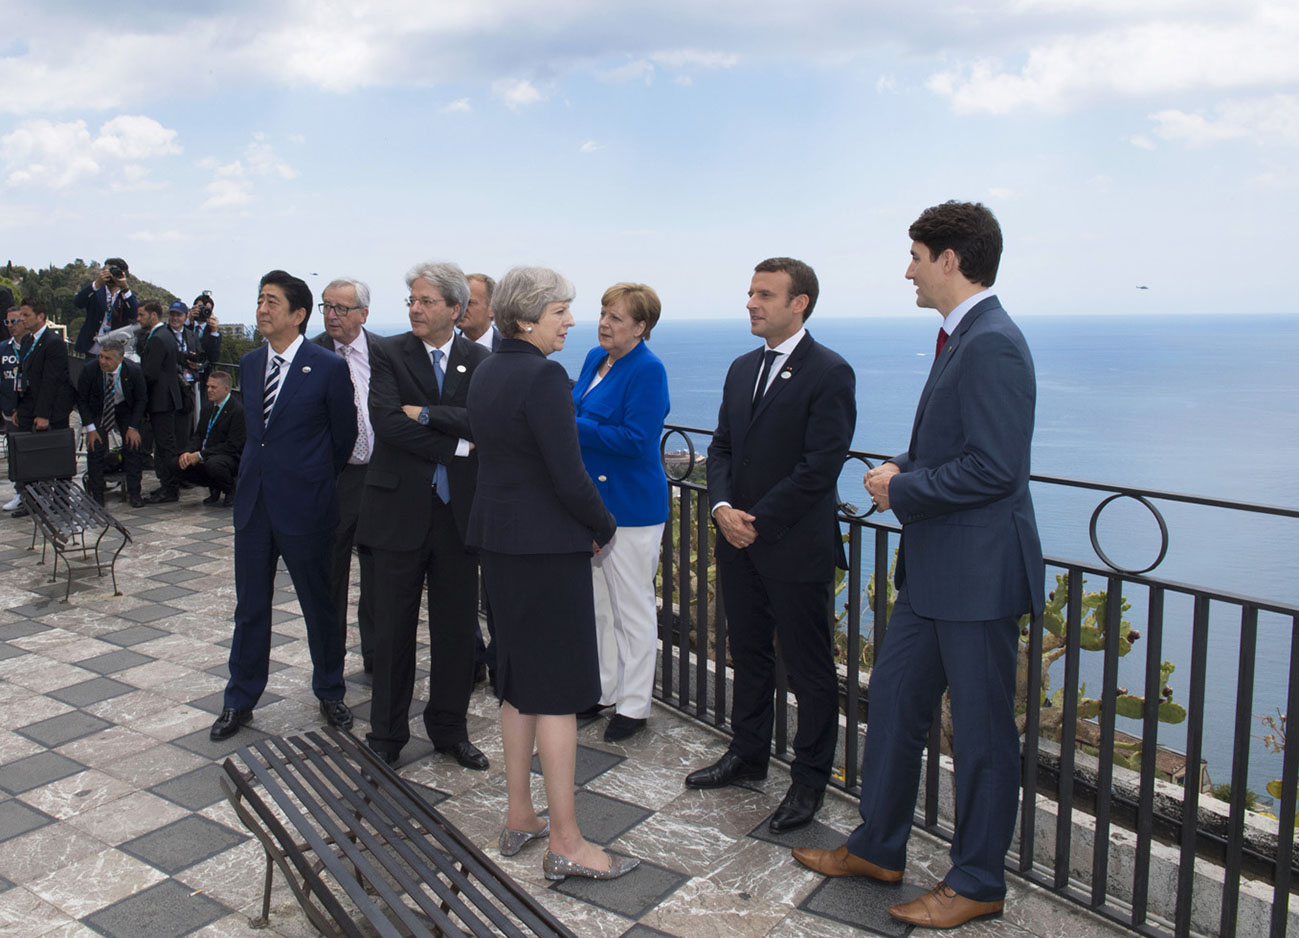 Ahinzo Abe, Jean-Claude Juncker, Paolo Gentiloni, Angela Merkel, Donald Trump, Theresa May, Justin Trudeau